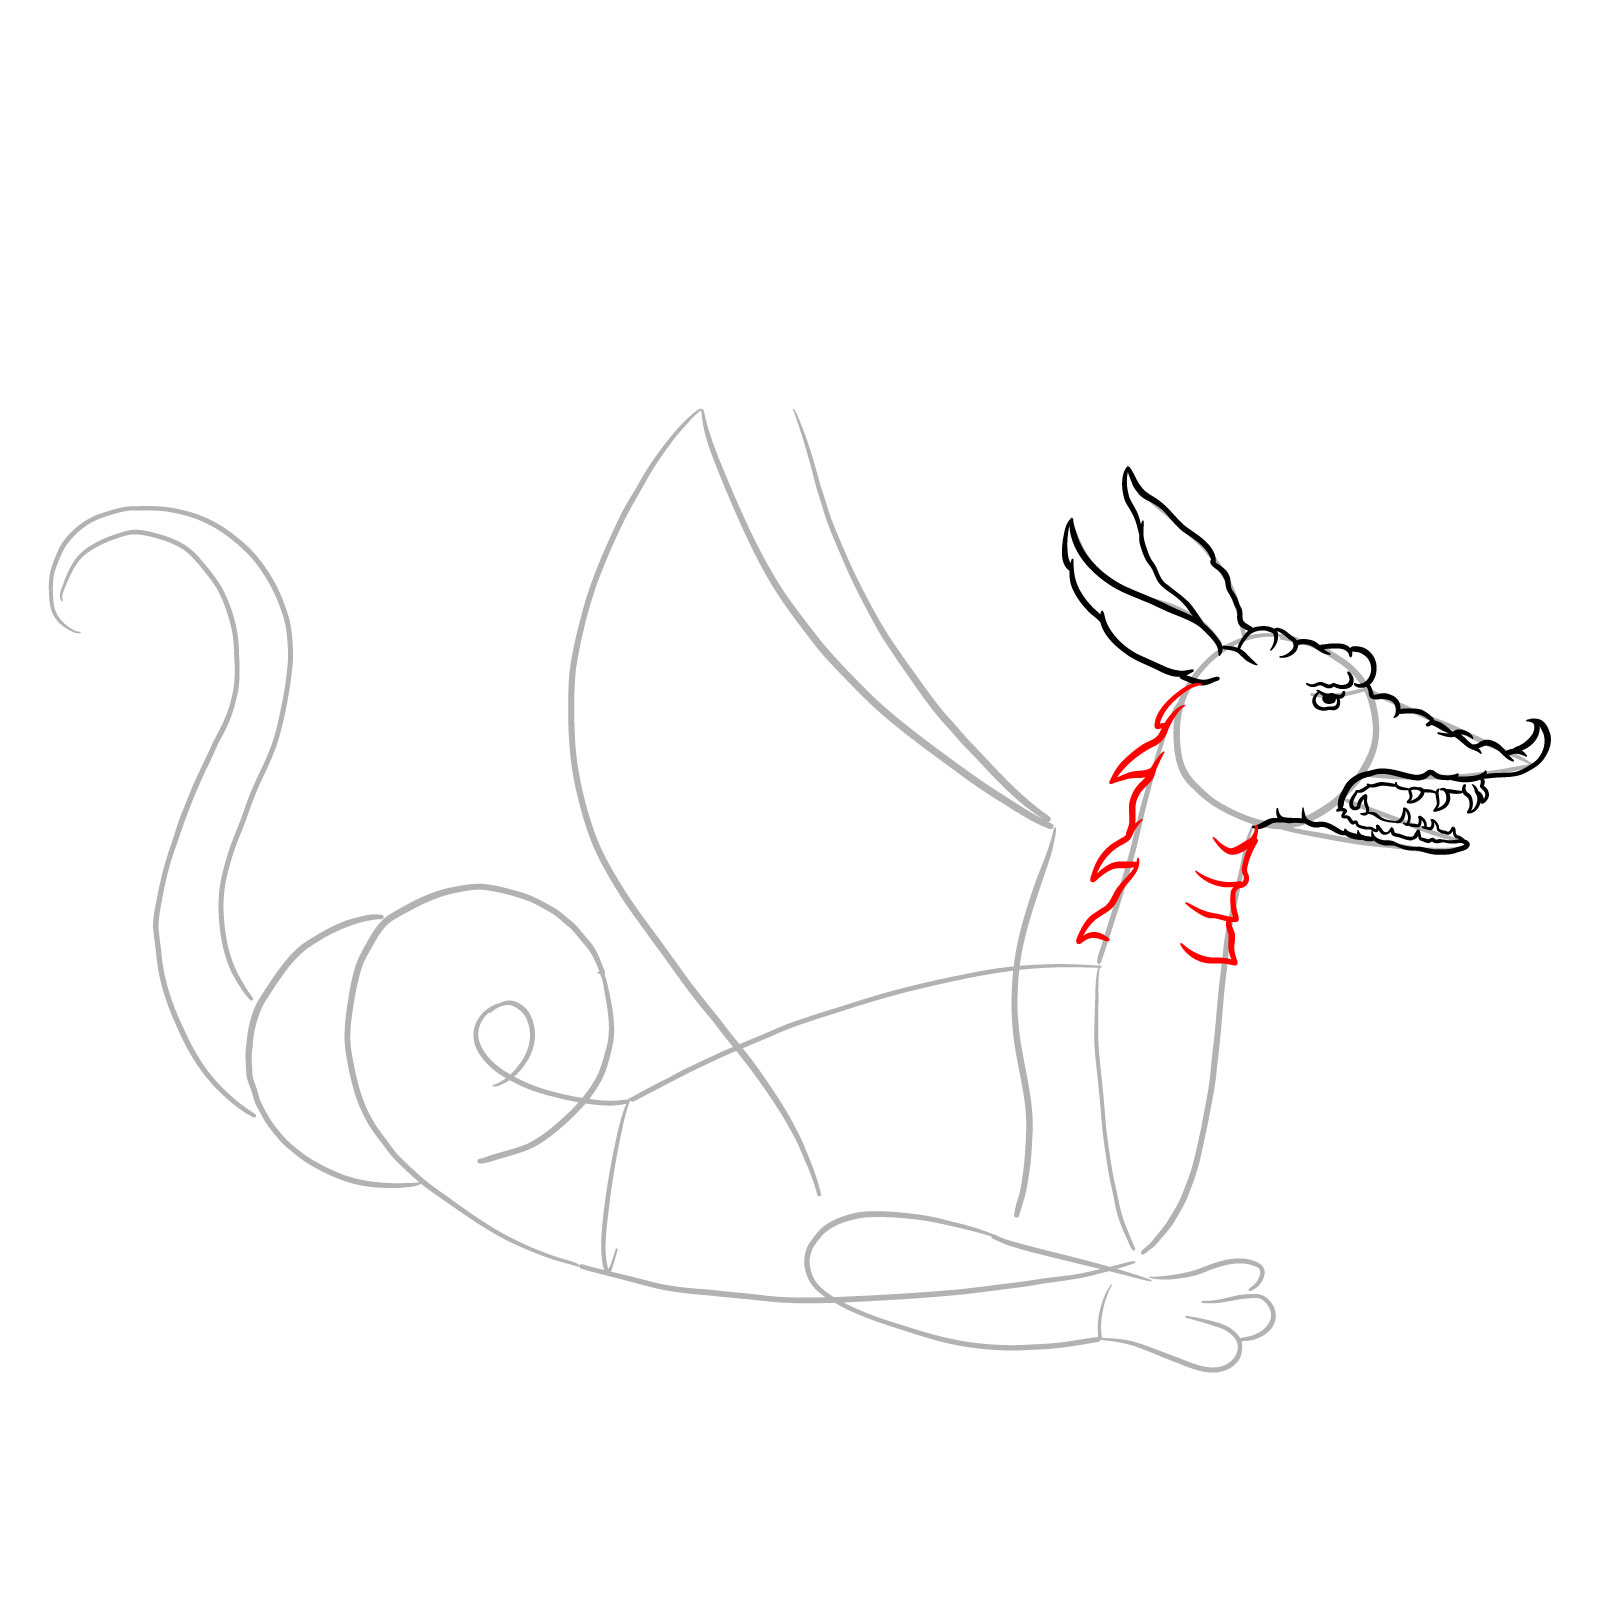 How to draw a Knucker dragon - step 10